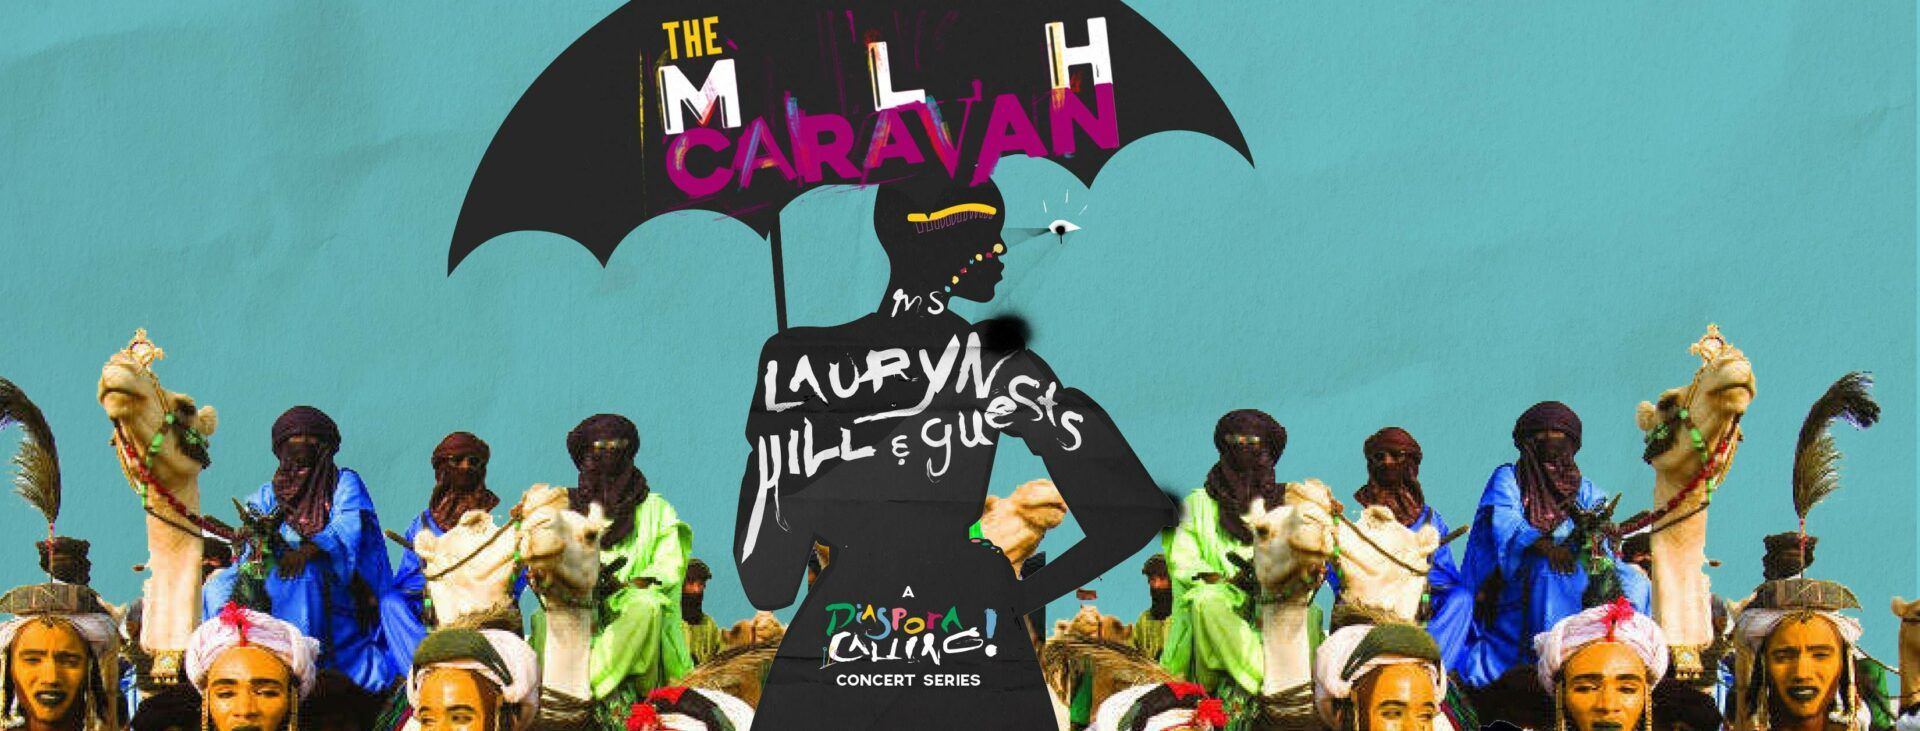 lauryn-hill-mlh-caravan-tour-poster